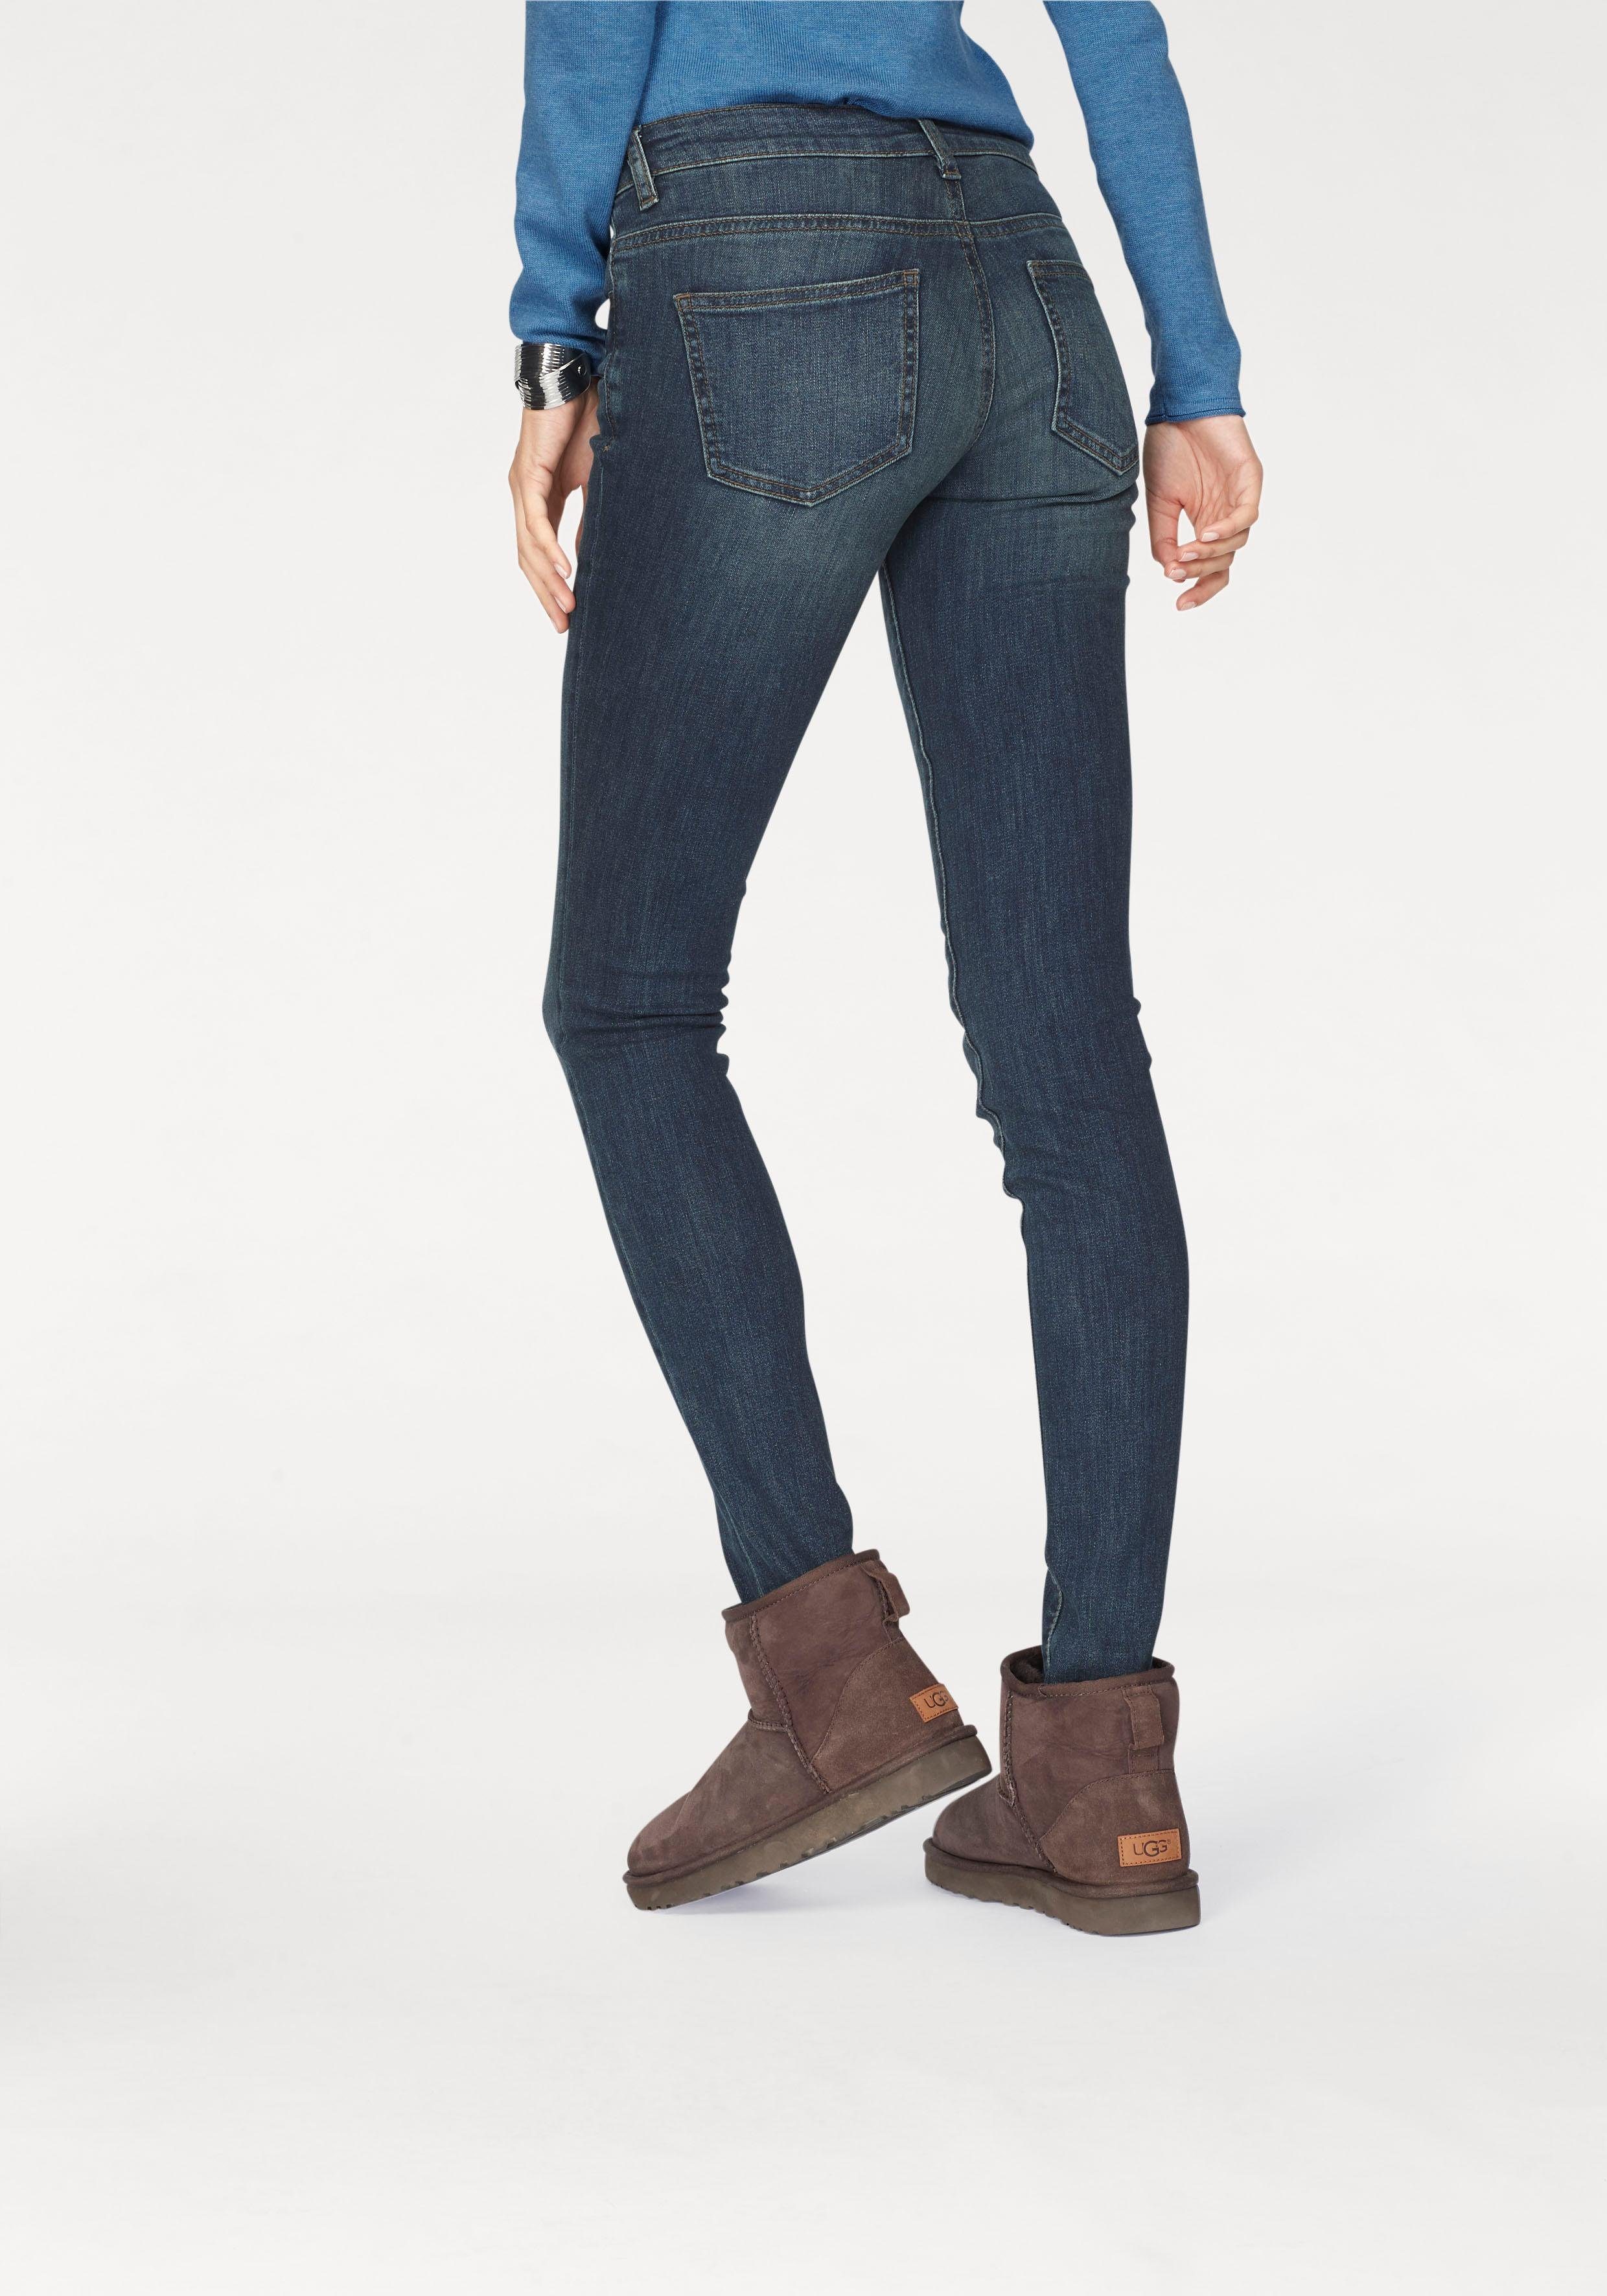 Otto - Tom Tailor NU 15% KORTING: Tom Tailor skinny jeans